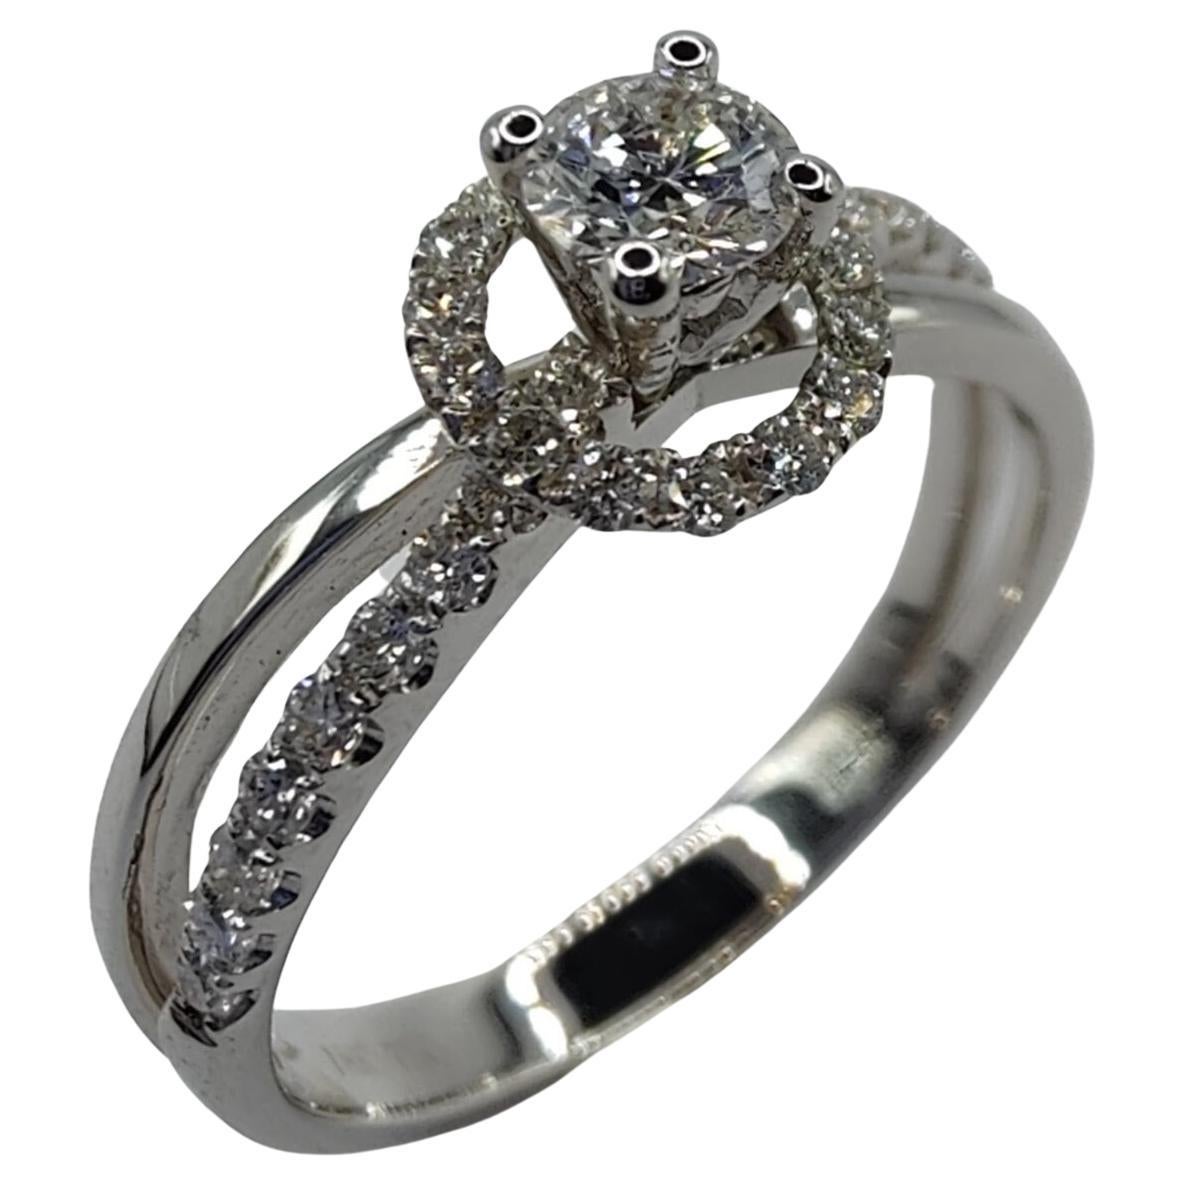 Hula Hoop .58 Carat Diamond Ring in 18K White Gold For Sale